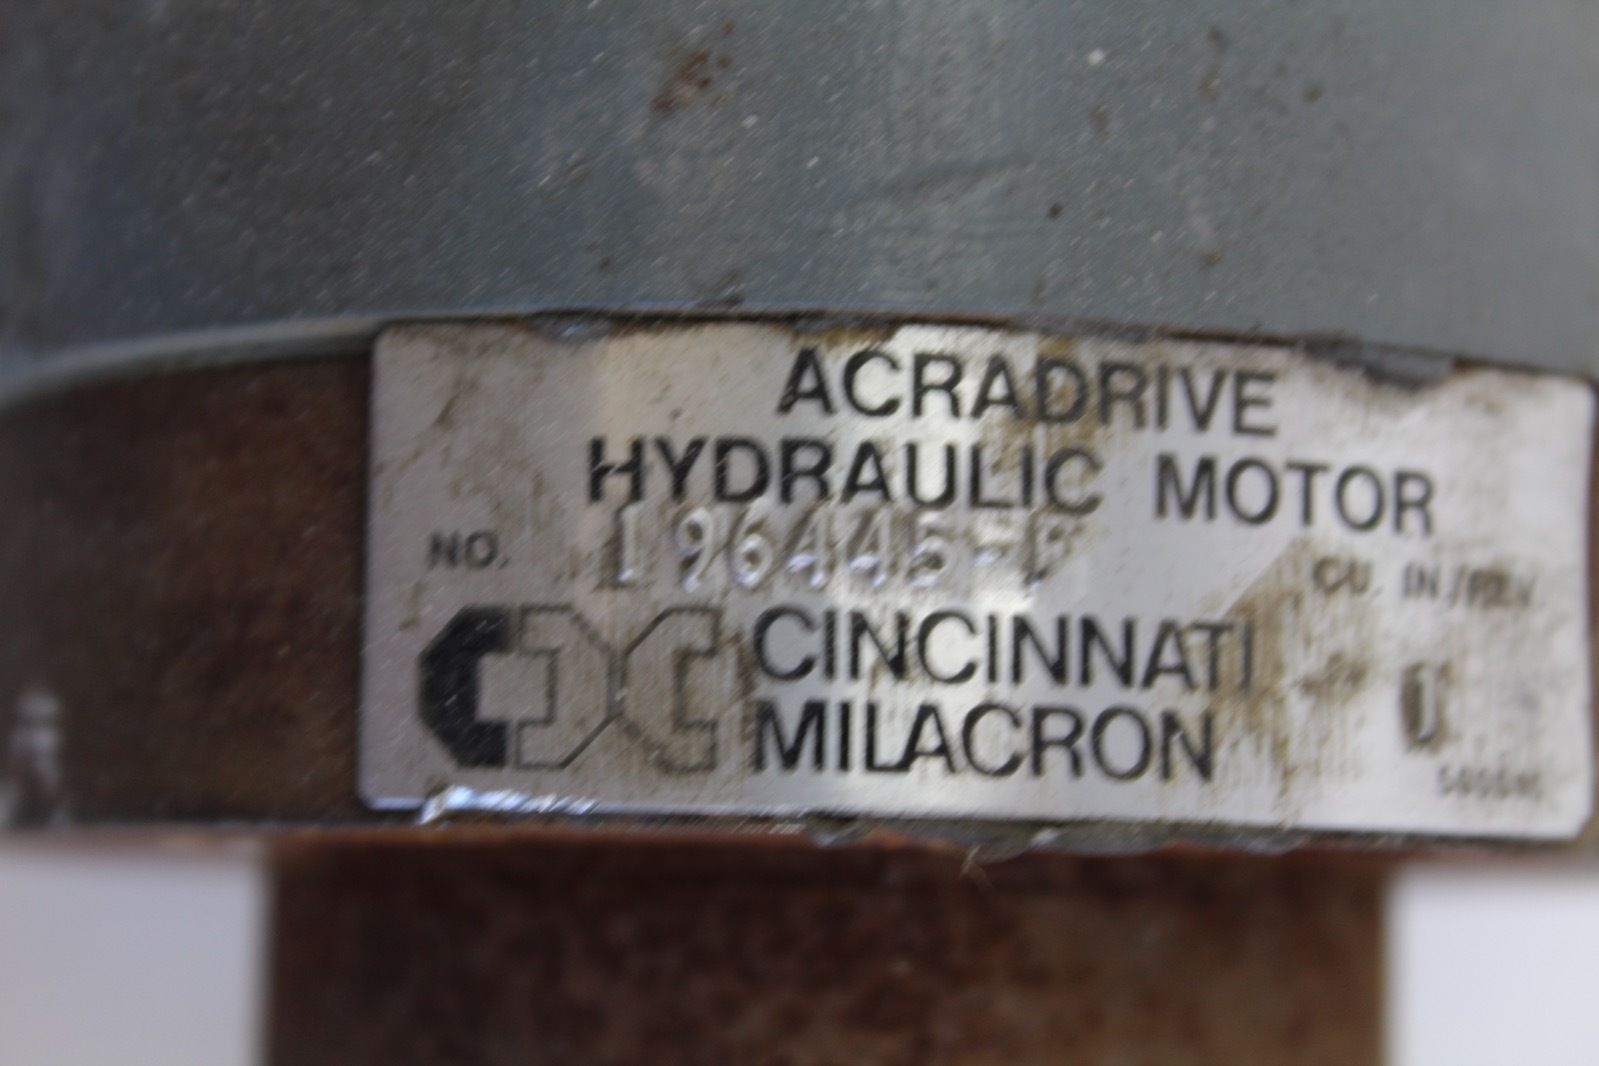 Acradrive Hydraulic motor Number: 196445-F *used* (B233) 2